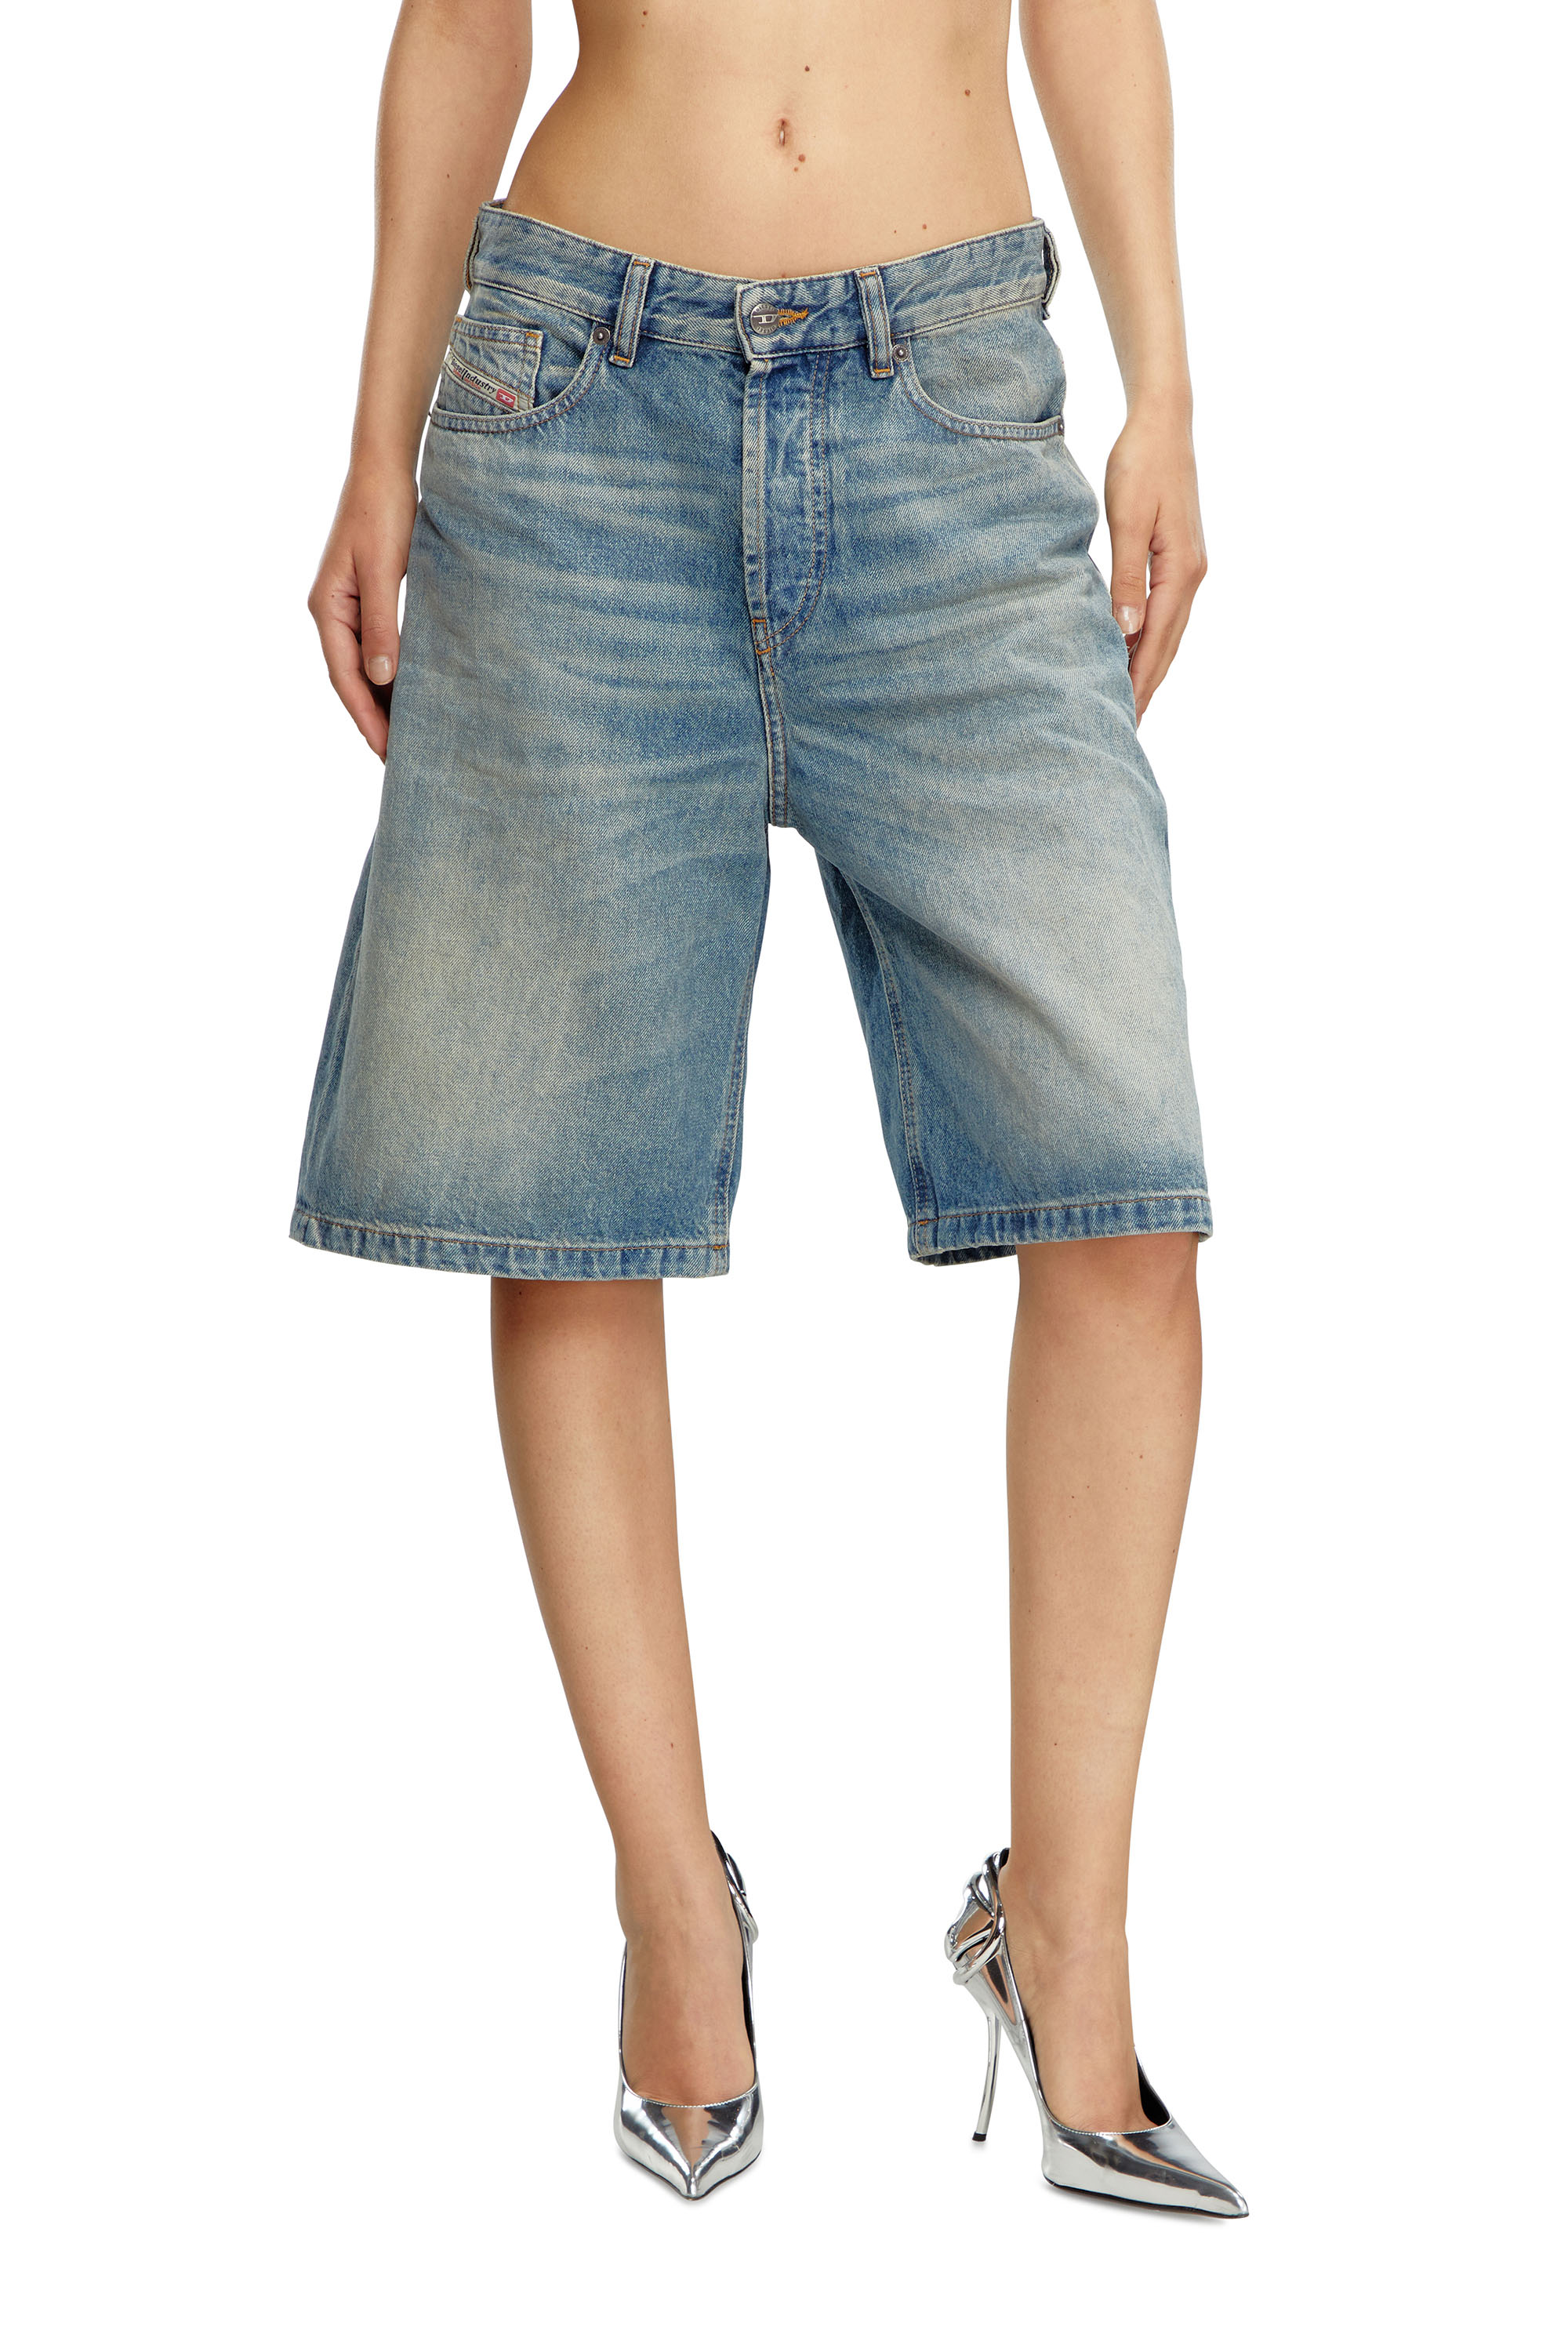 Diesel - Pantalones cortos en denim - Shorts - Mujer - Azul marino